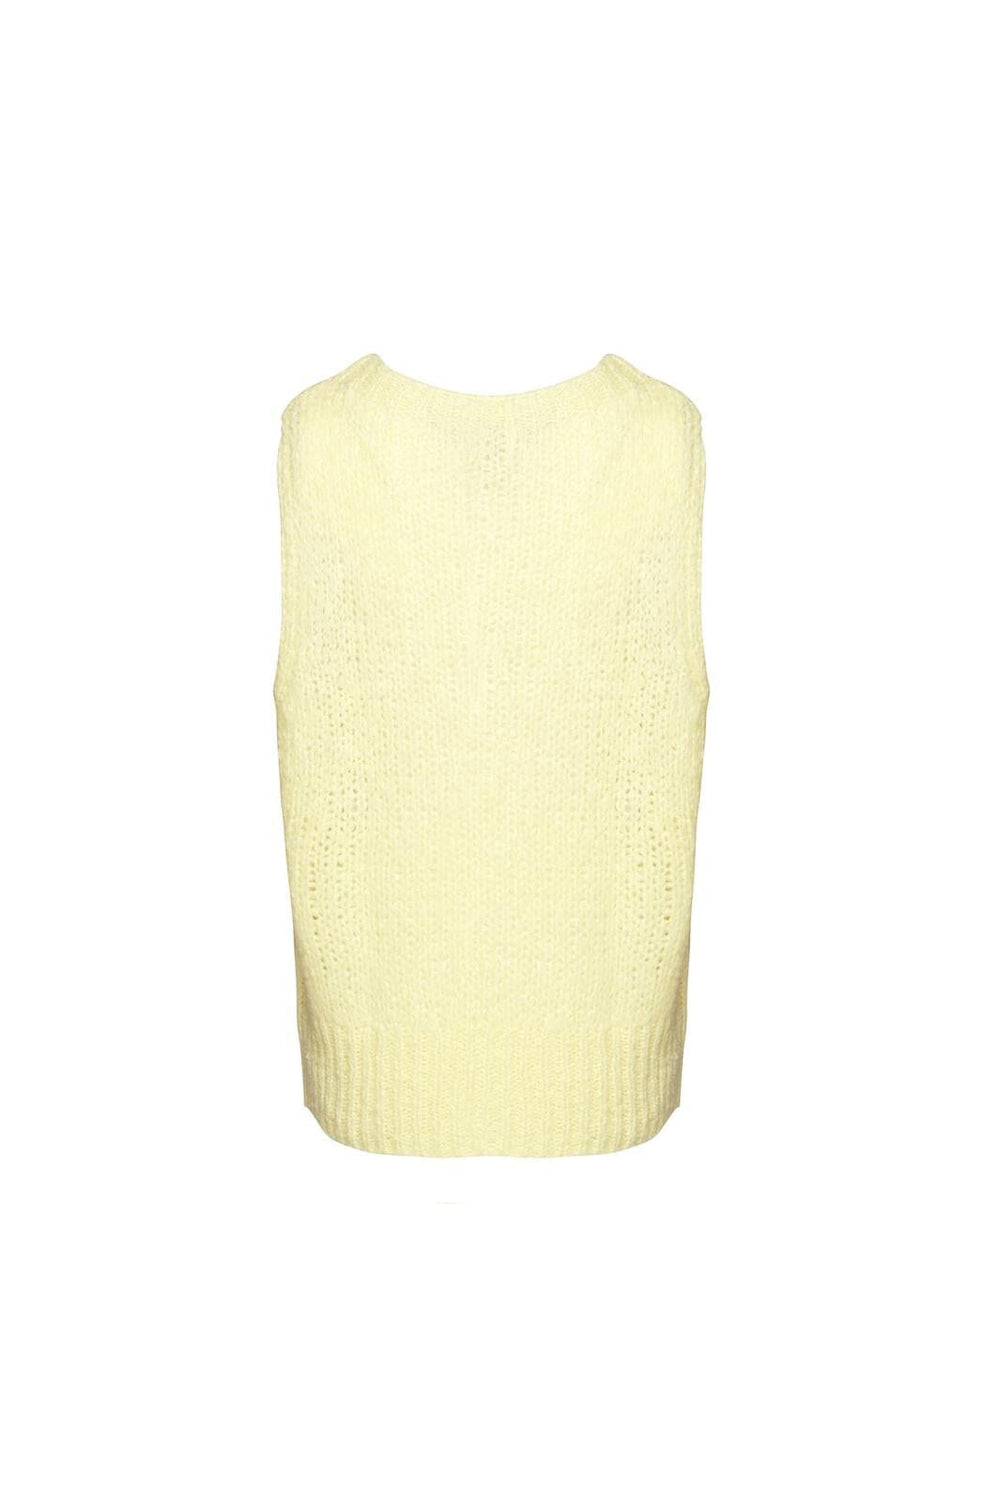 Noella - Kala Pearl Slipover Wool - pearl Pale Yellow